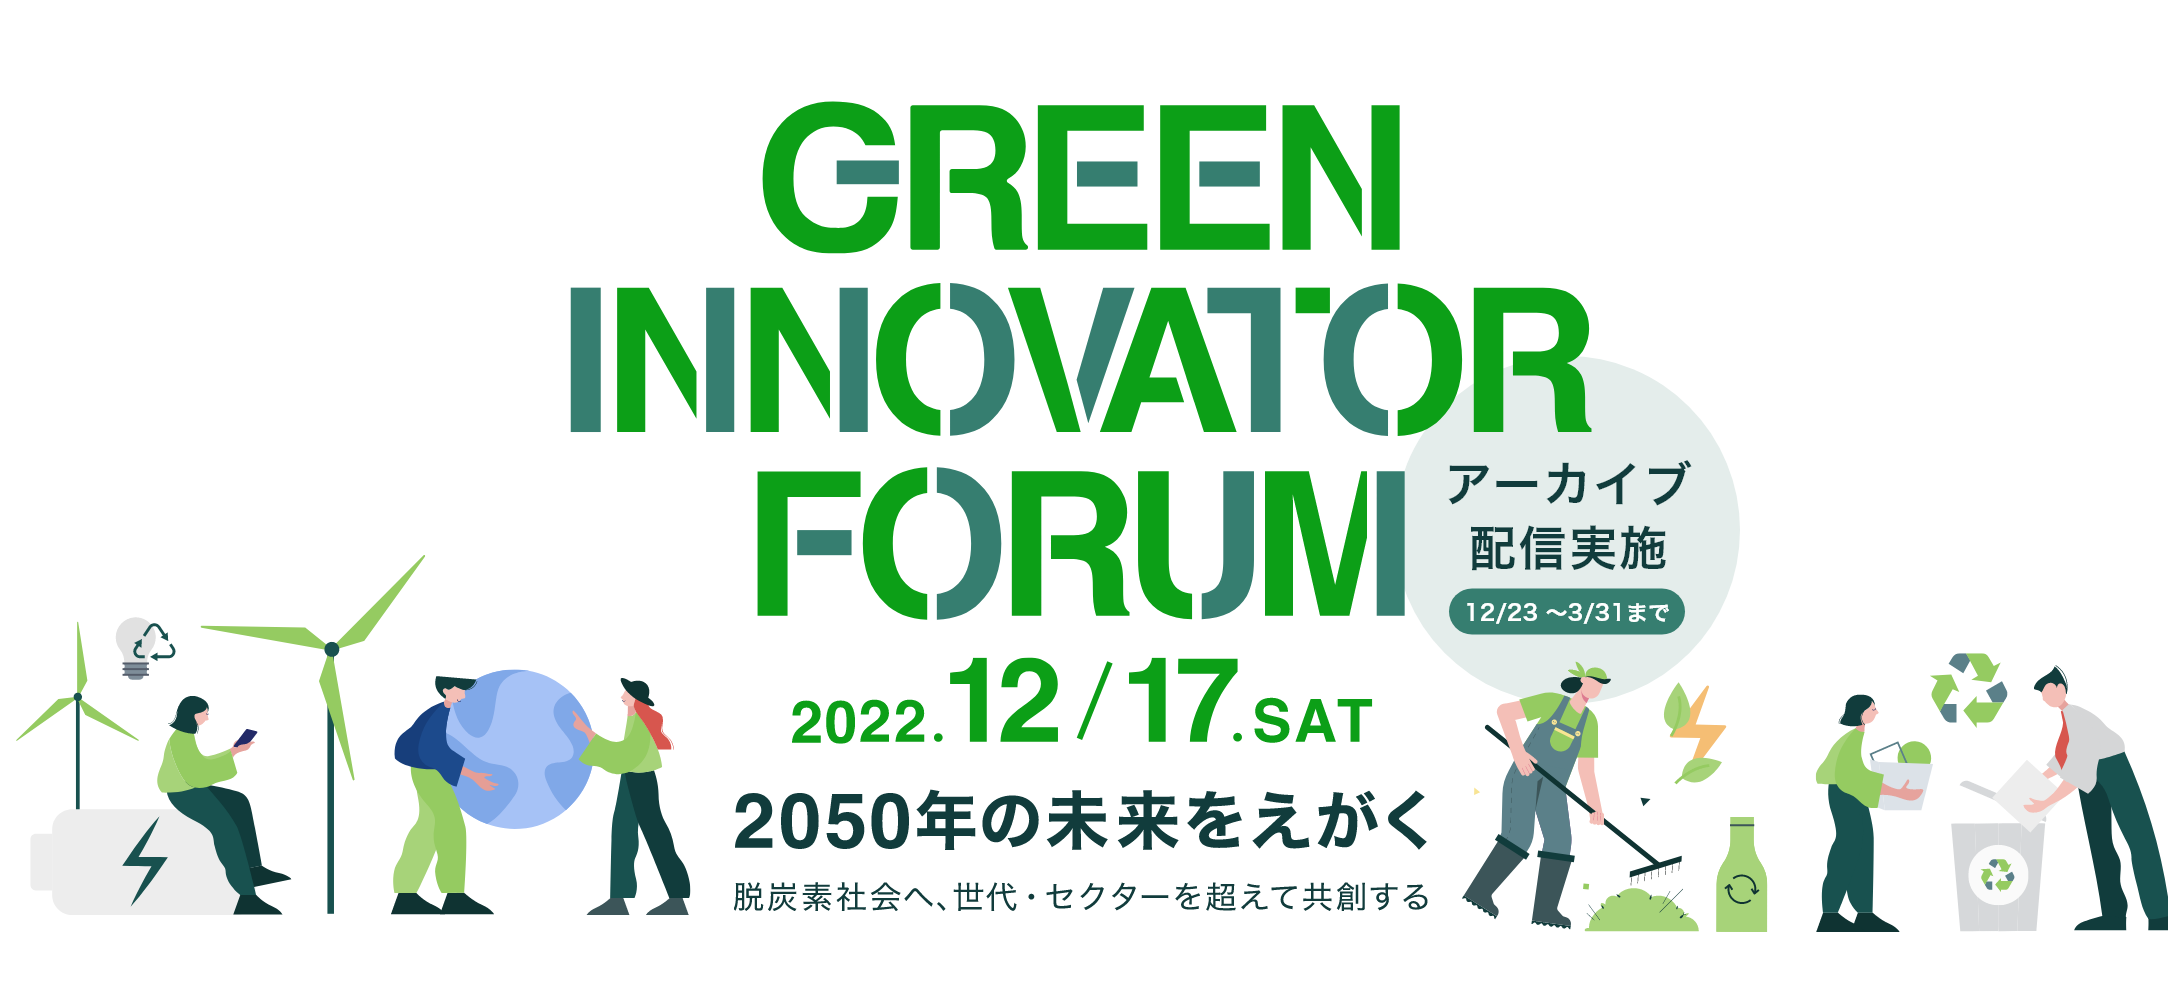 GREEN INNOVATOR FORUM 2022.12/17 SAT 参加無料 現地開催&オンライン配信 2050年の未来をえがく 脱炭素社会へ、世代・セクターを超えて共創する